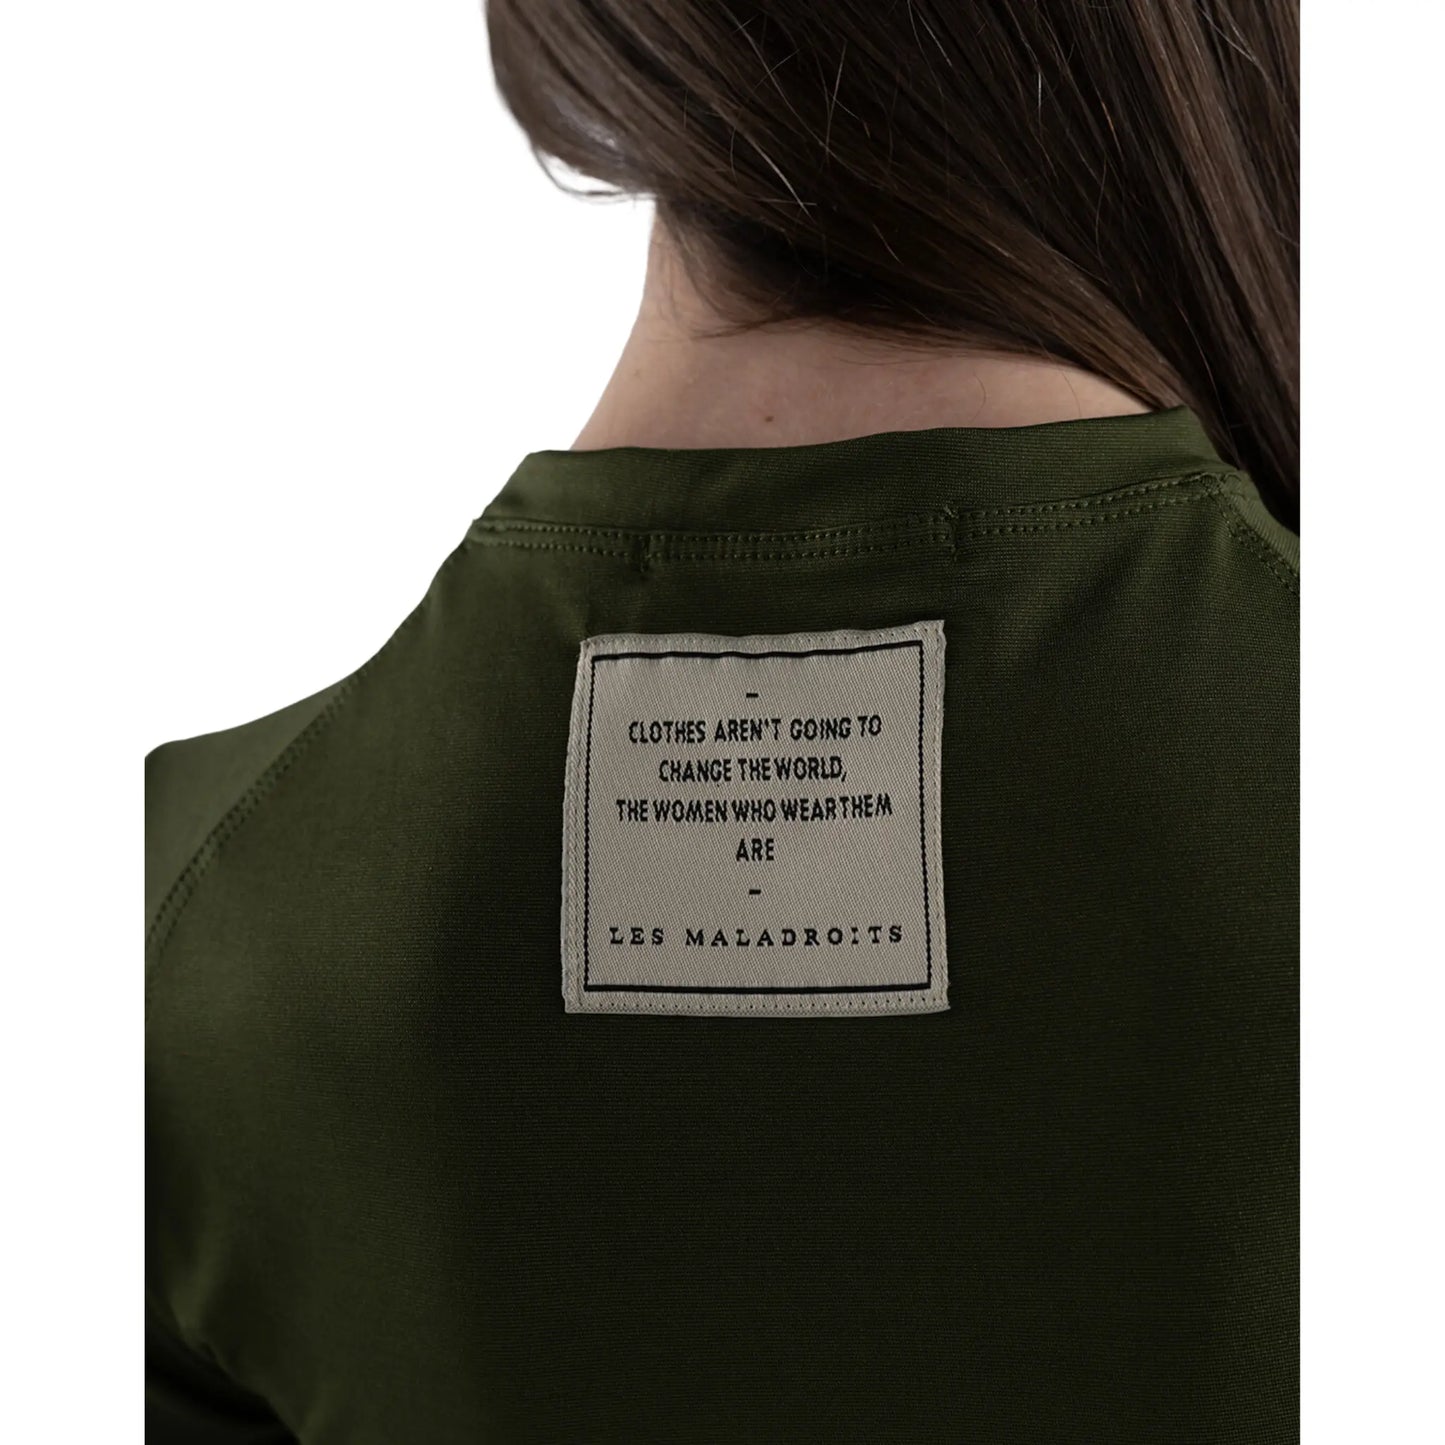 LES MALADROITS Crop Top & Biker Shorts Set Olive Green close-up view on crop top back